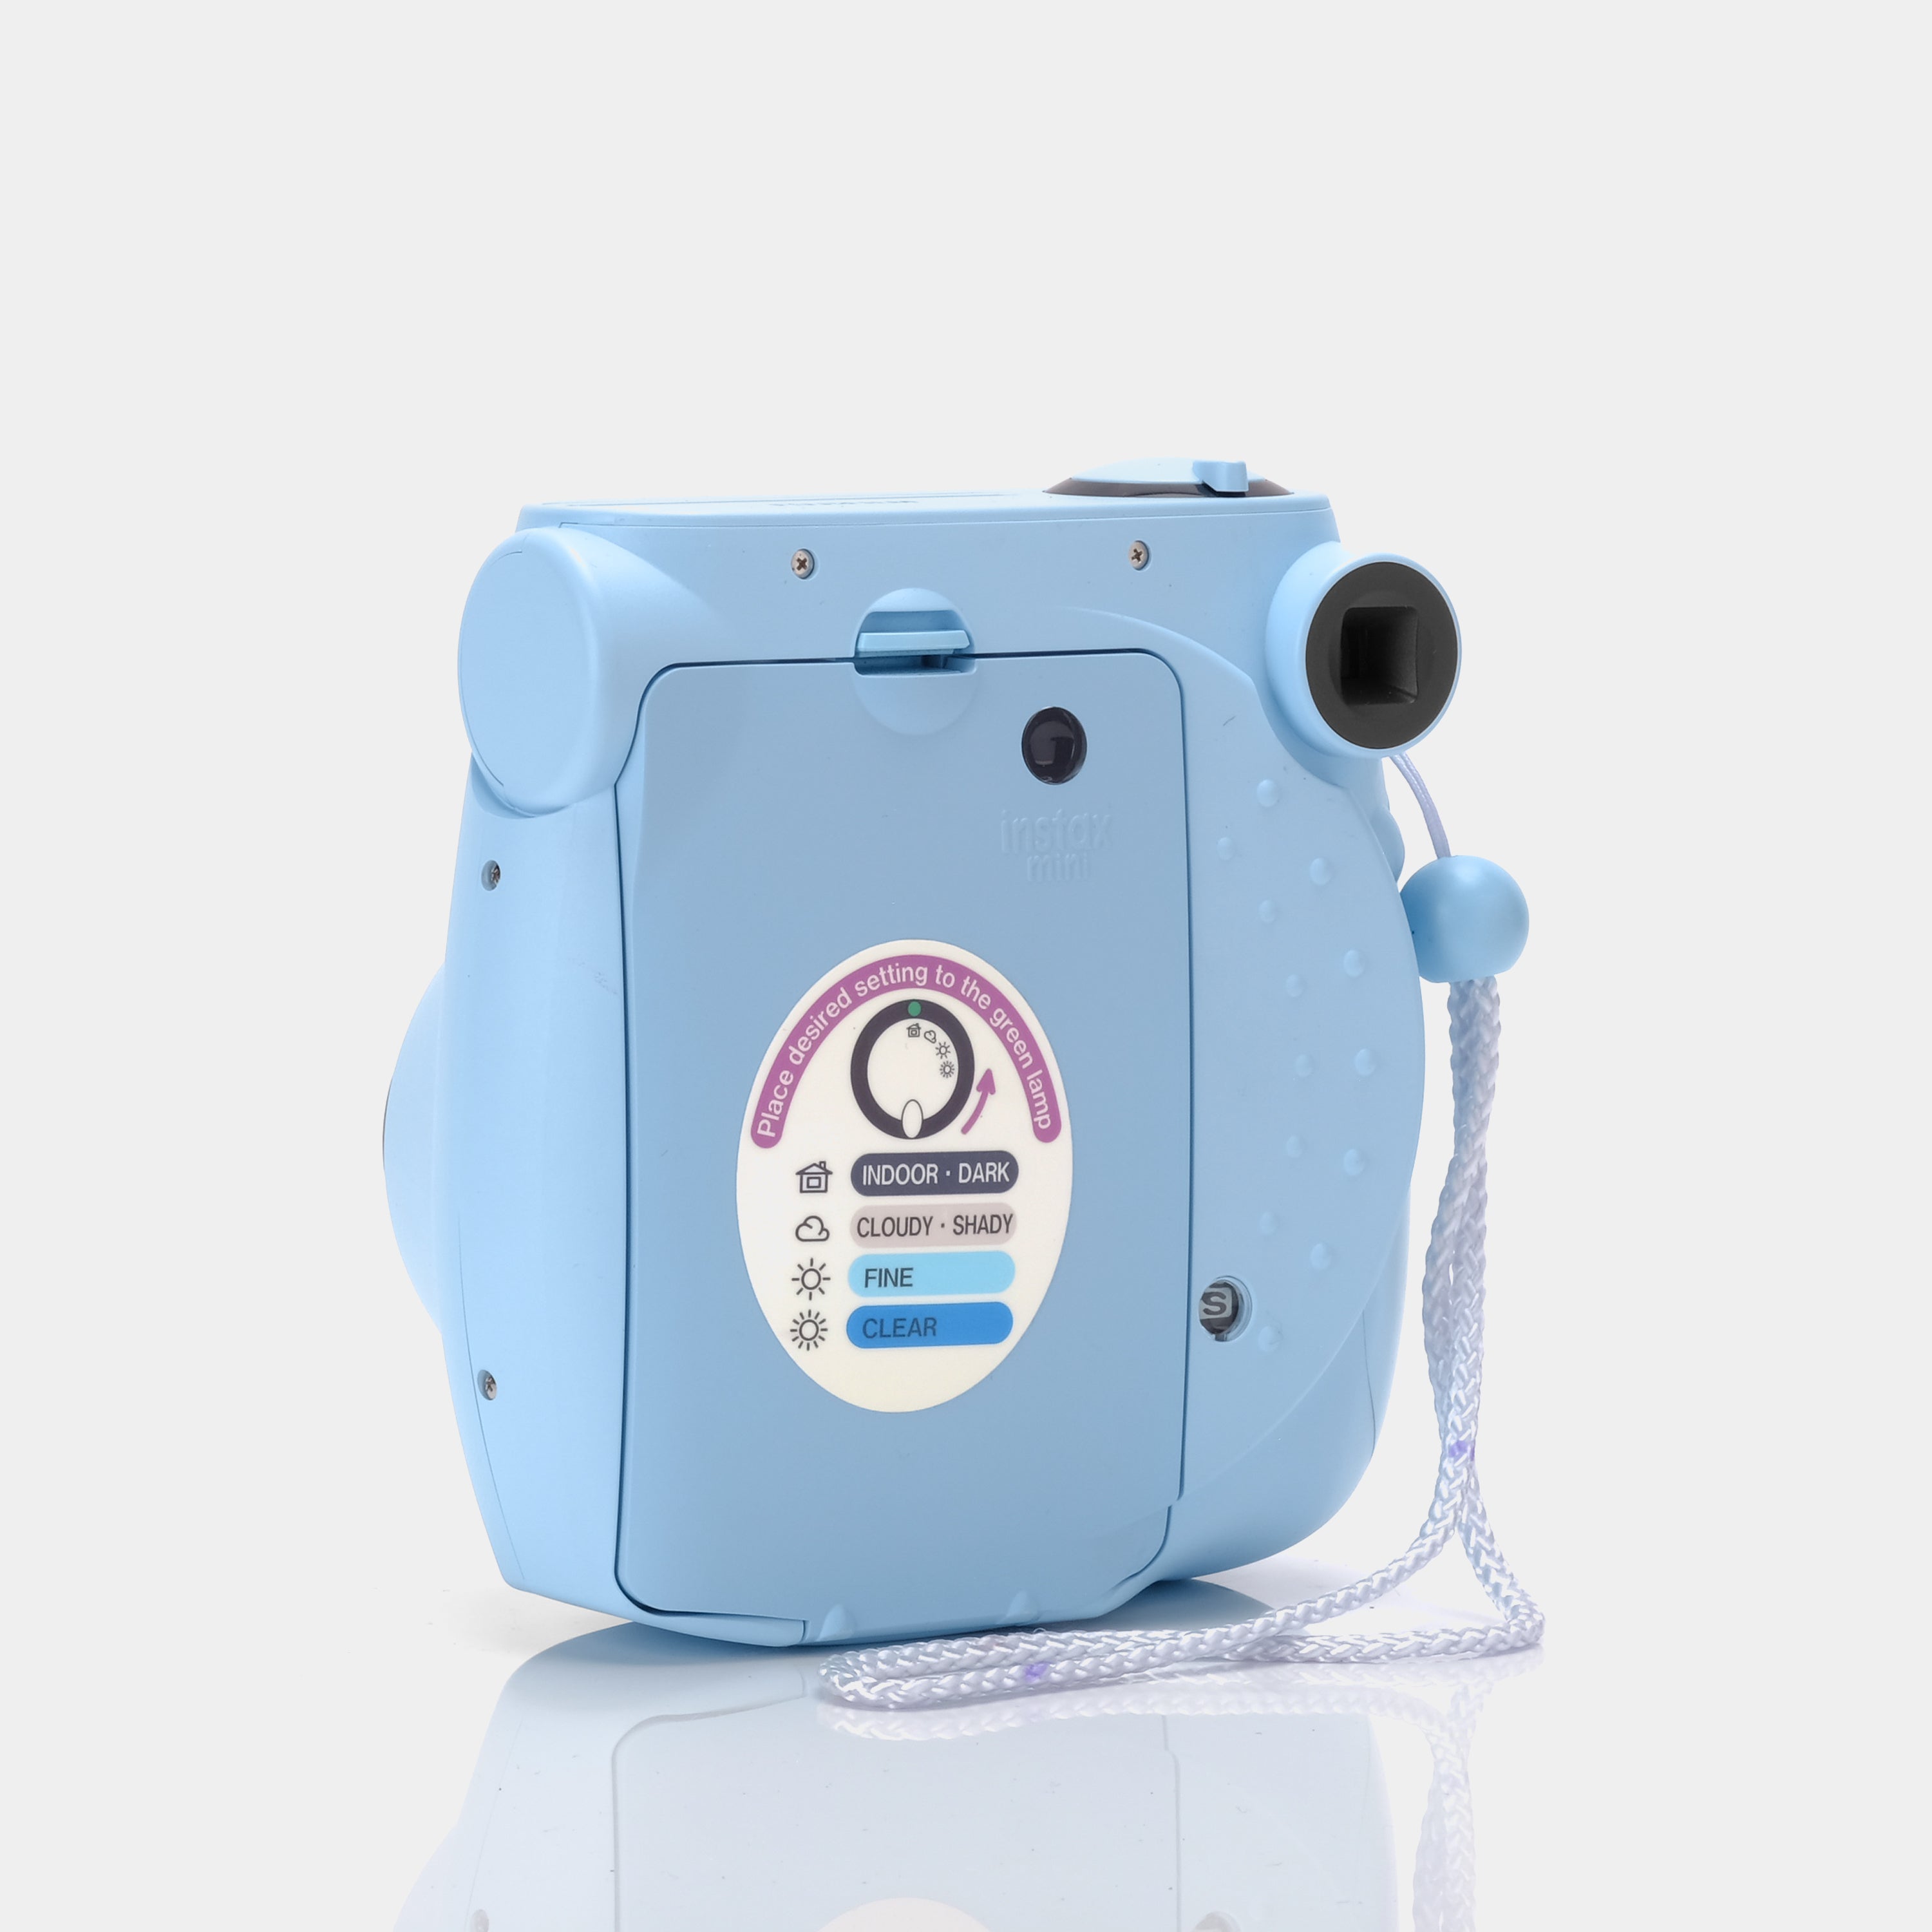 Fujifilm Instax Mini 7S Blue Instant Film Camera With Purple Bag - Refurbished